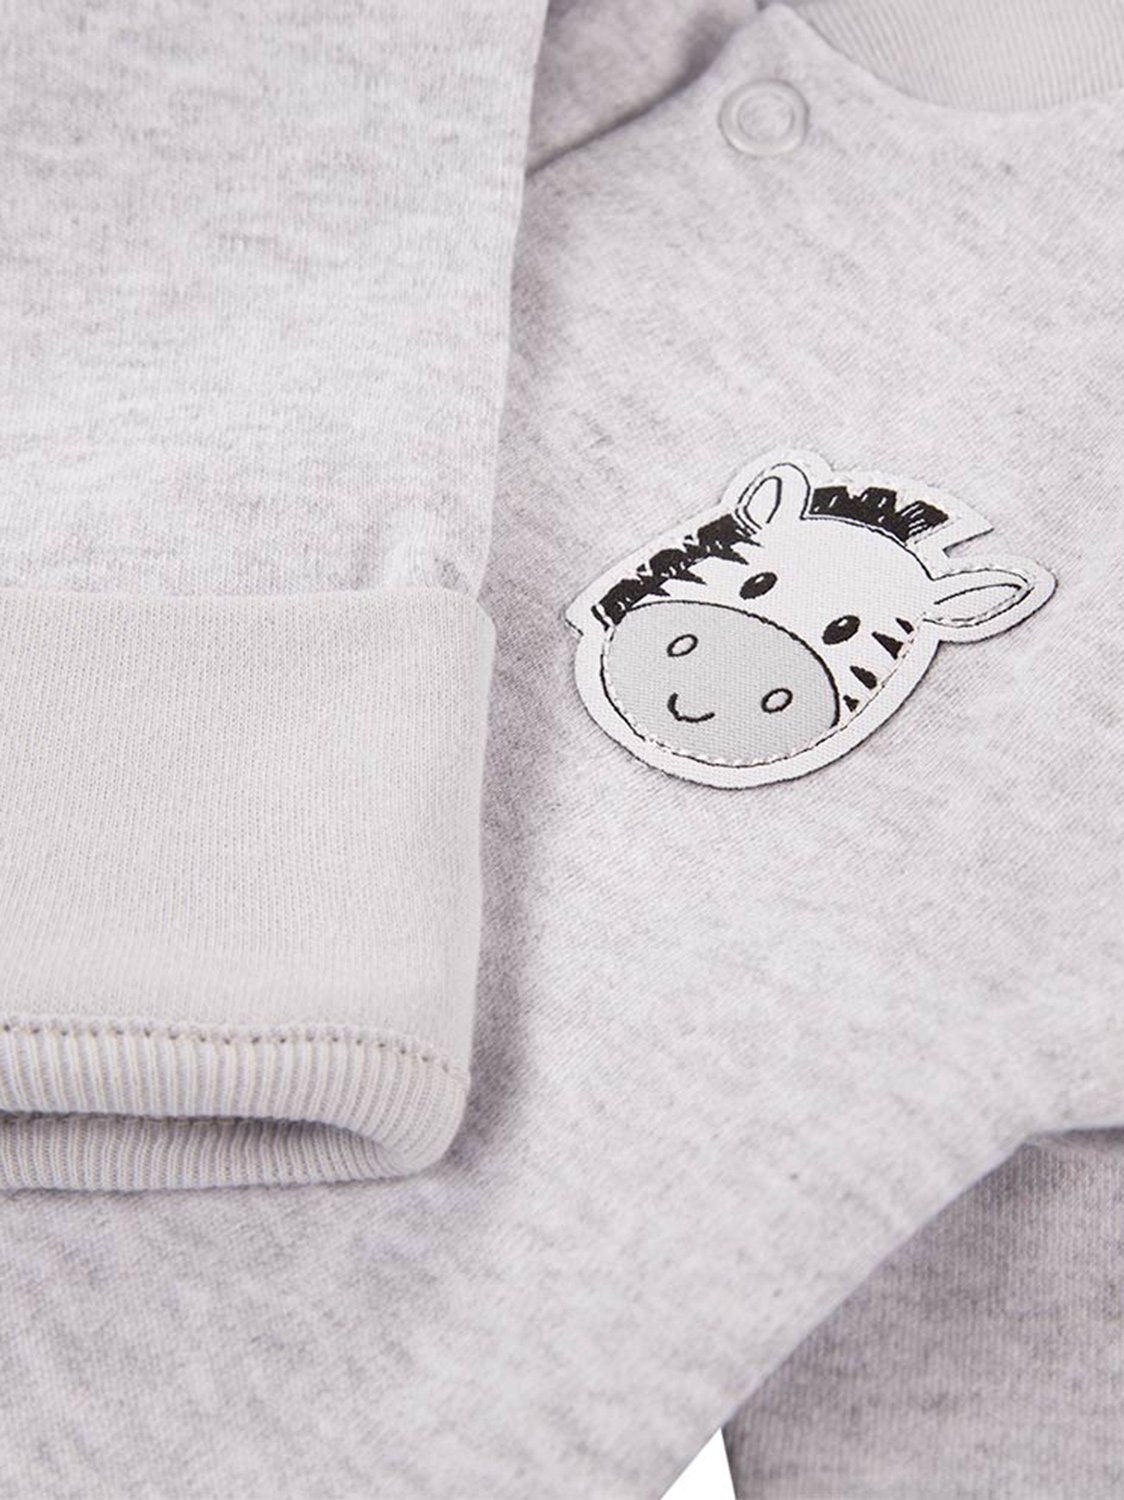 Tiny Baby Sleepsuit, Footed, Cute Zebra Design - Grey - Sleepsuit / Babygrow - EEVI